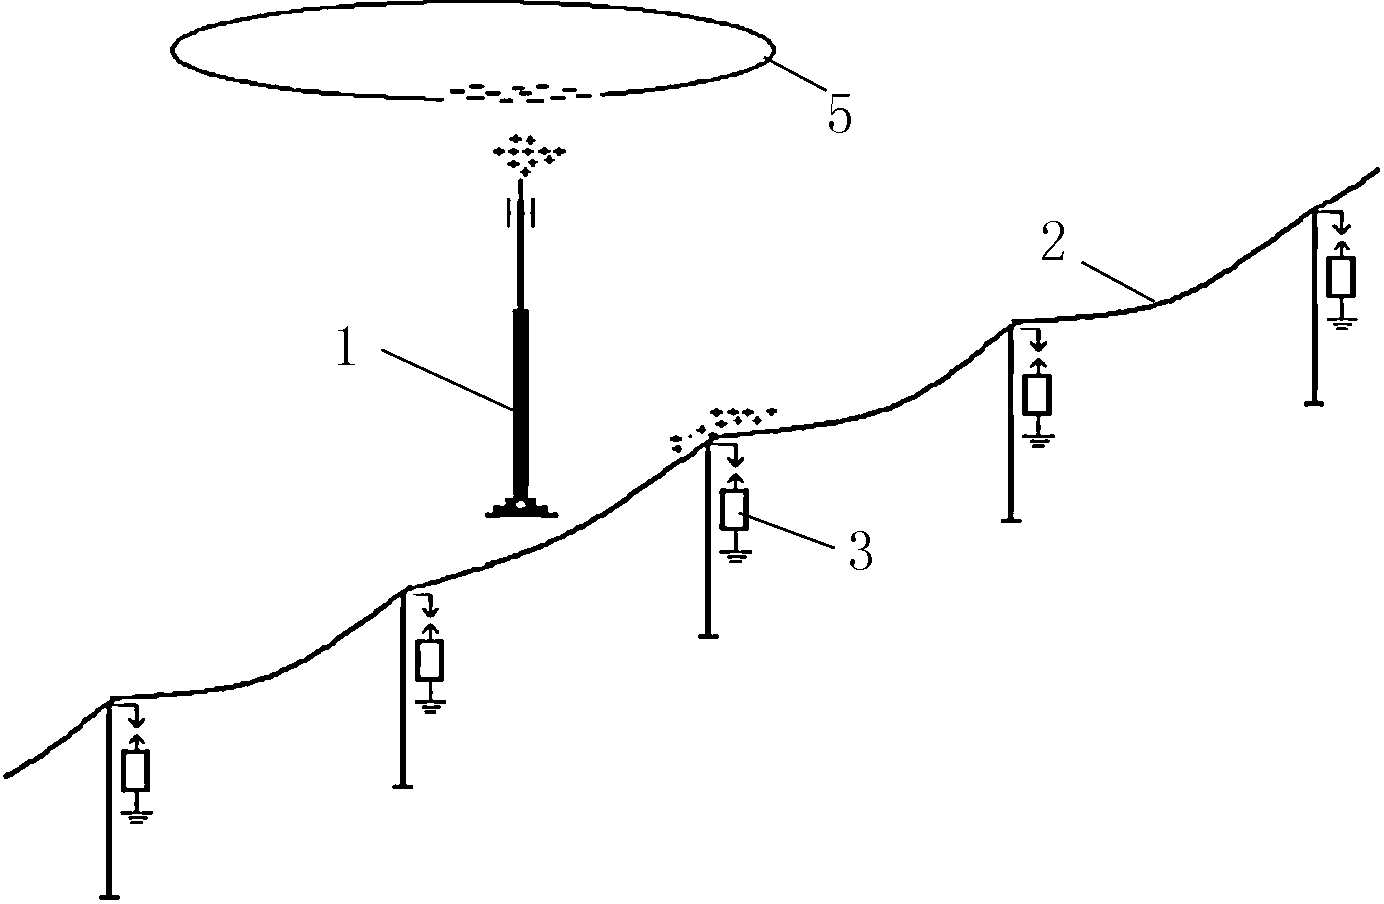 Lightning protection method of distribution line near microwave tower